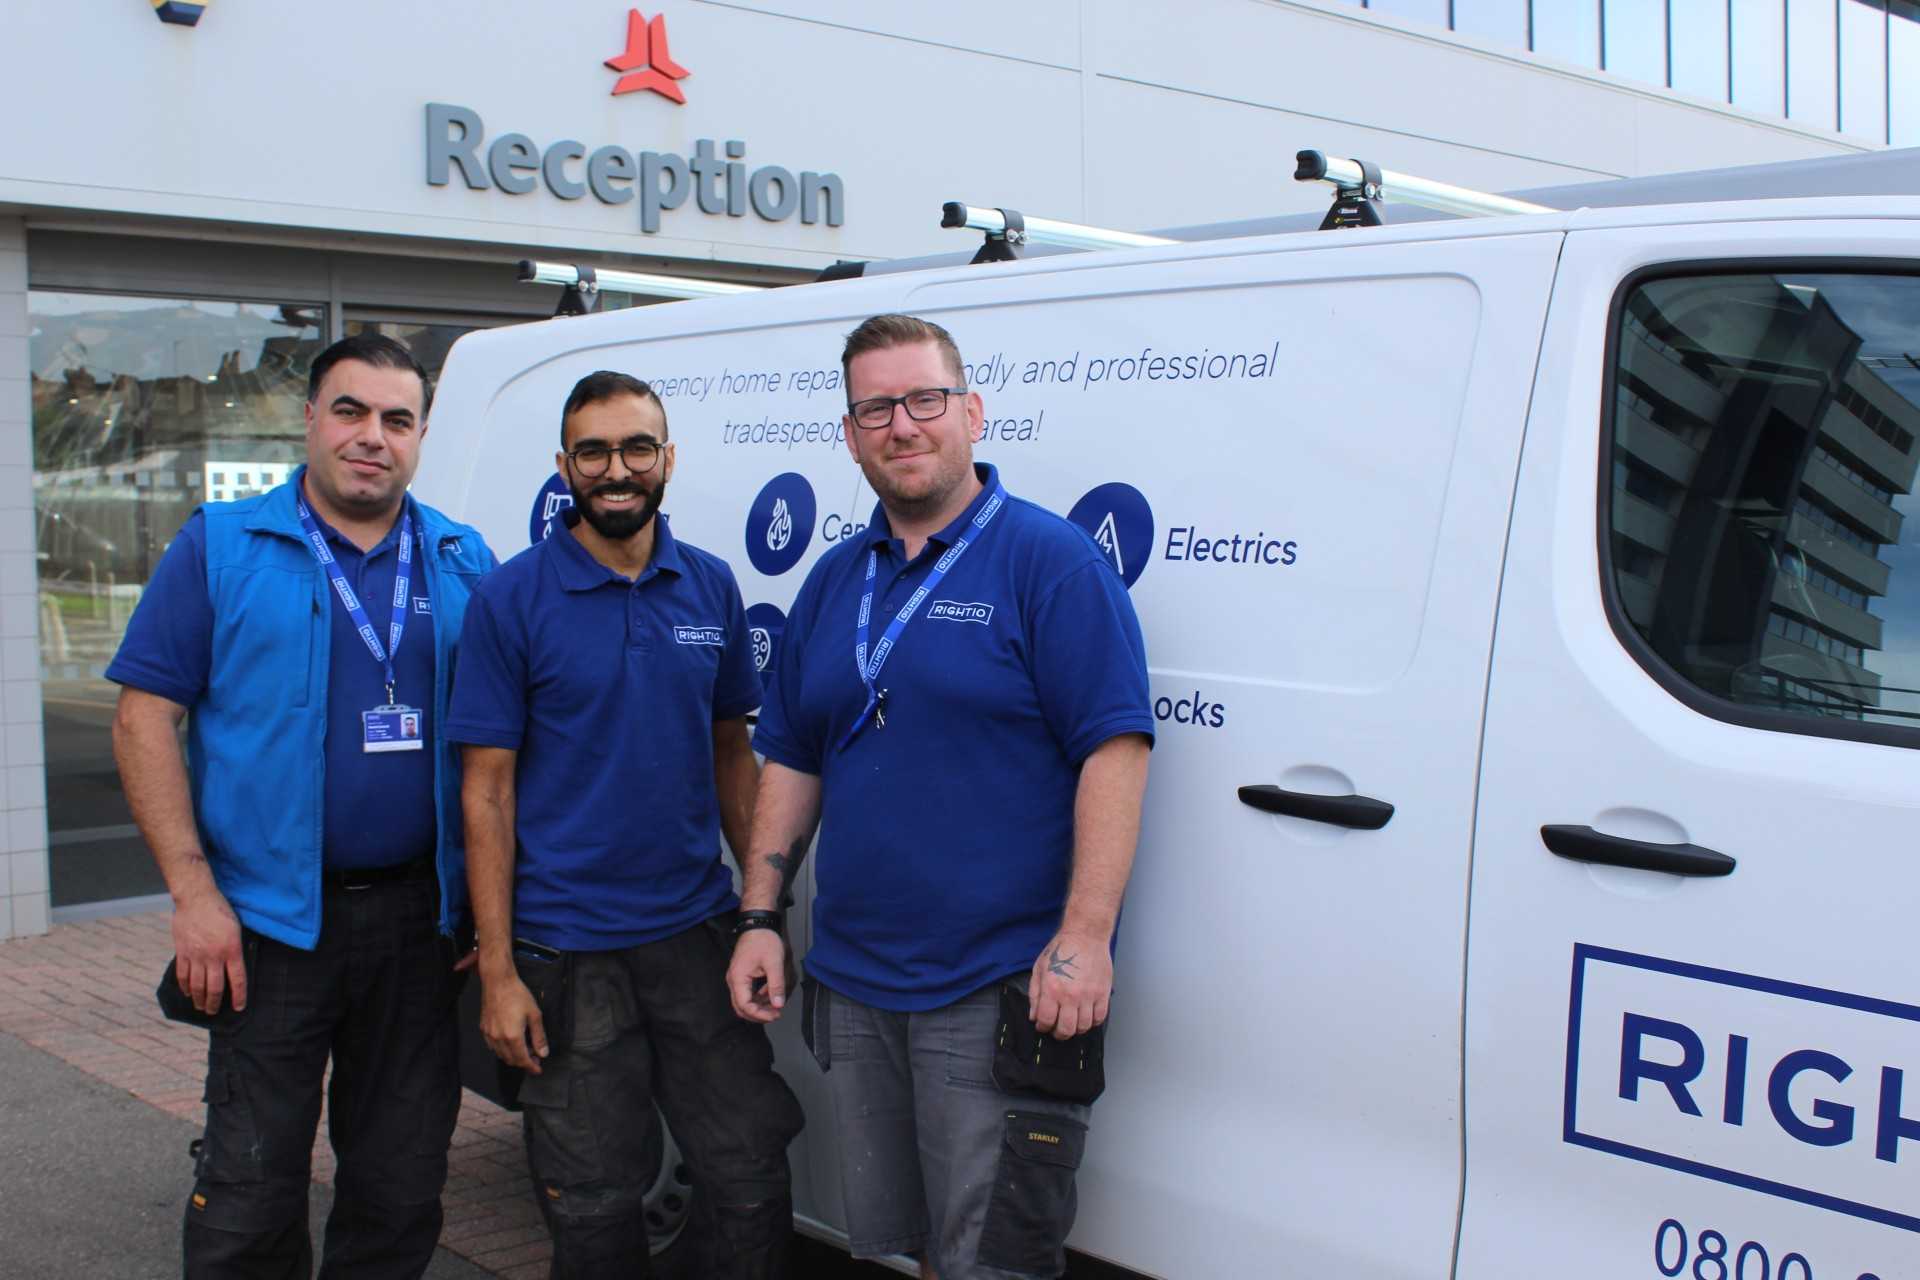 Three Rightio engineers standing in front of a Rightio van in full uniform smiling